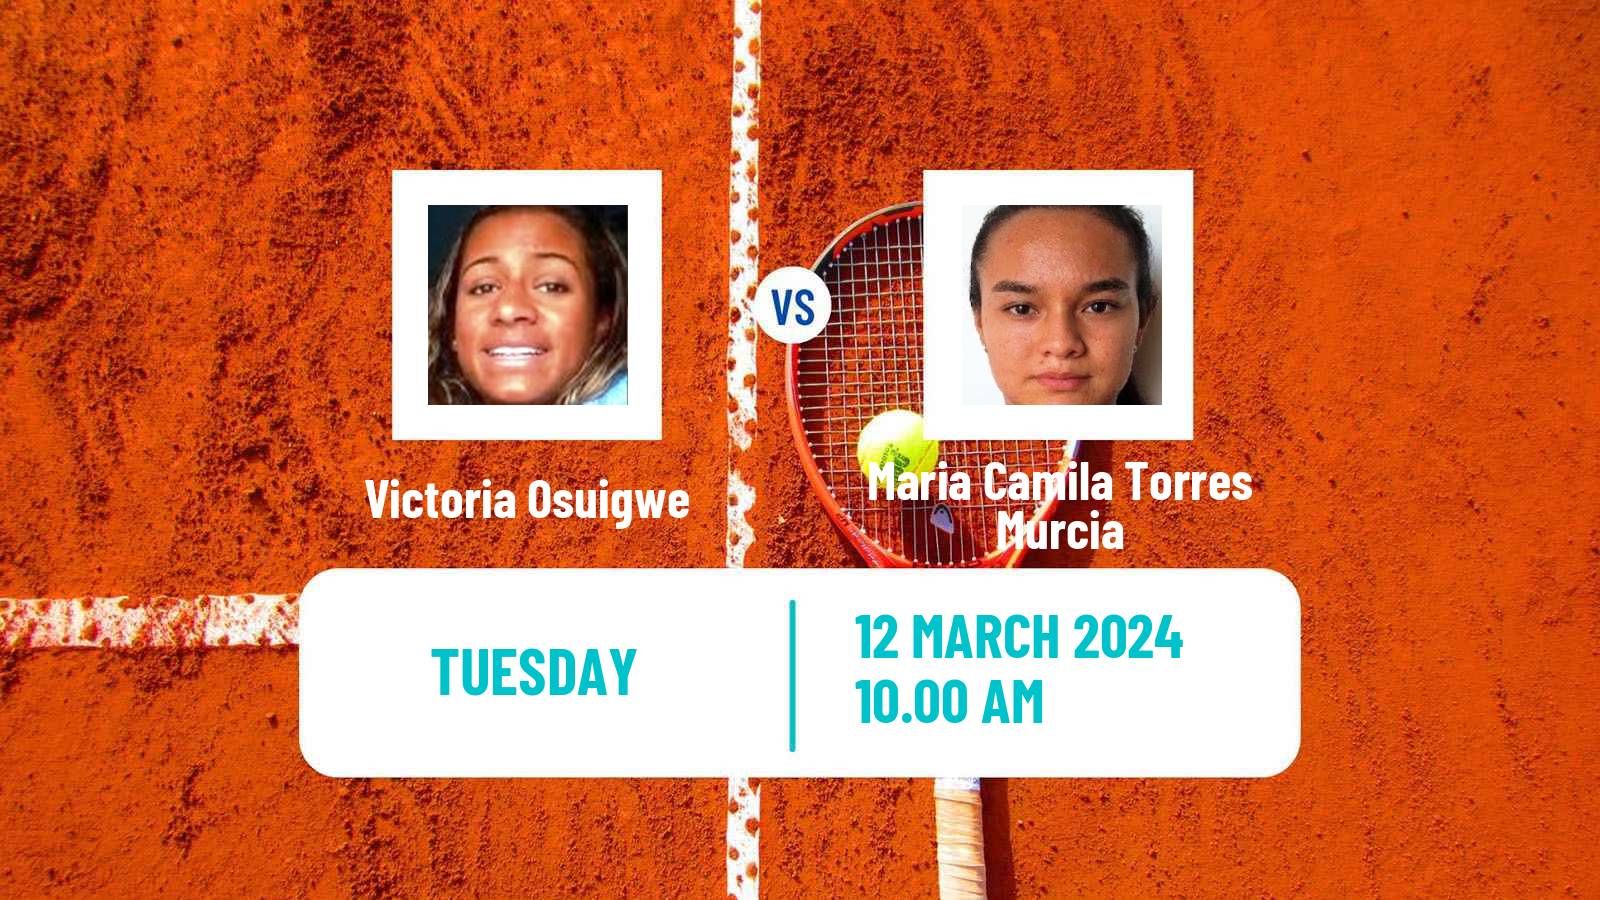 Tennis ITF W35 Santo Domingo 2 Women Victoria Osuigwe - Maria Camila Torres Murcia